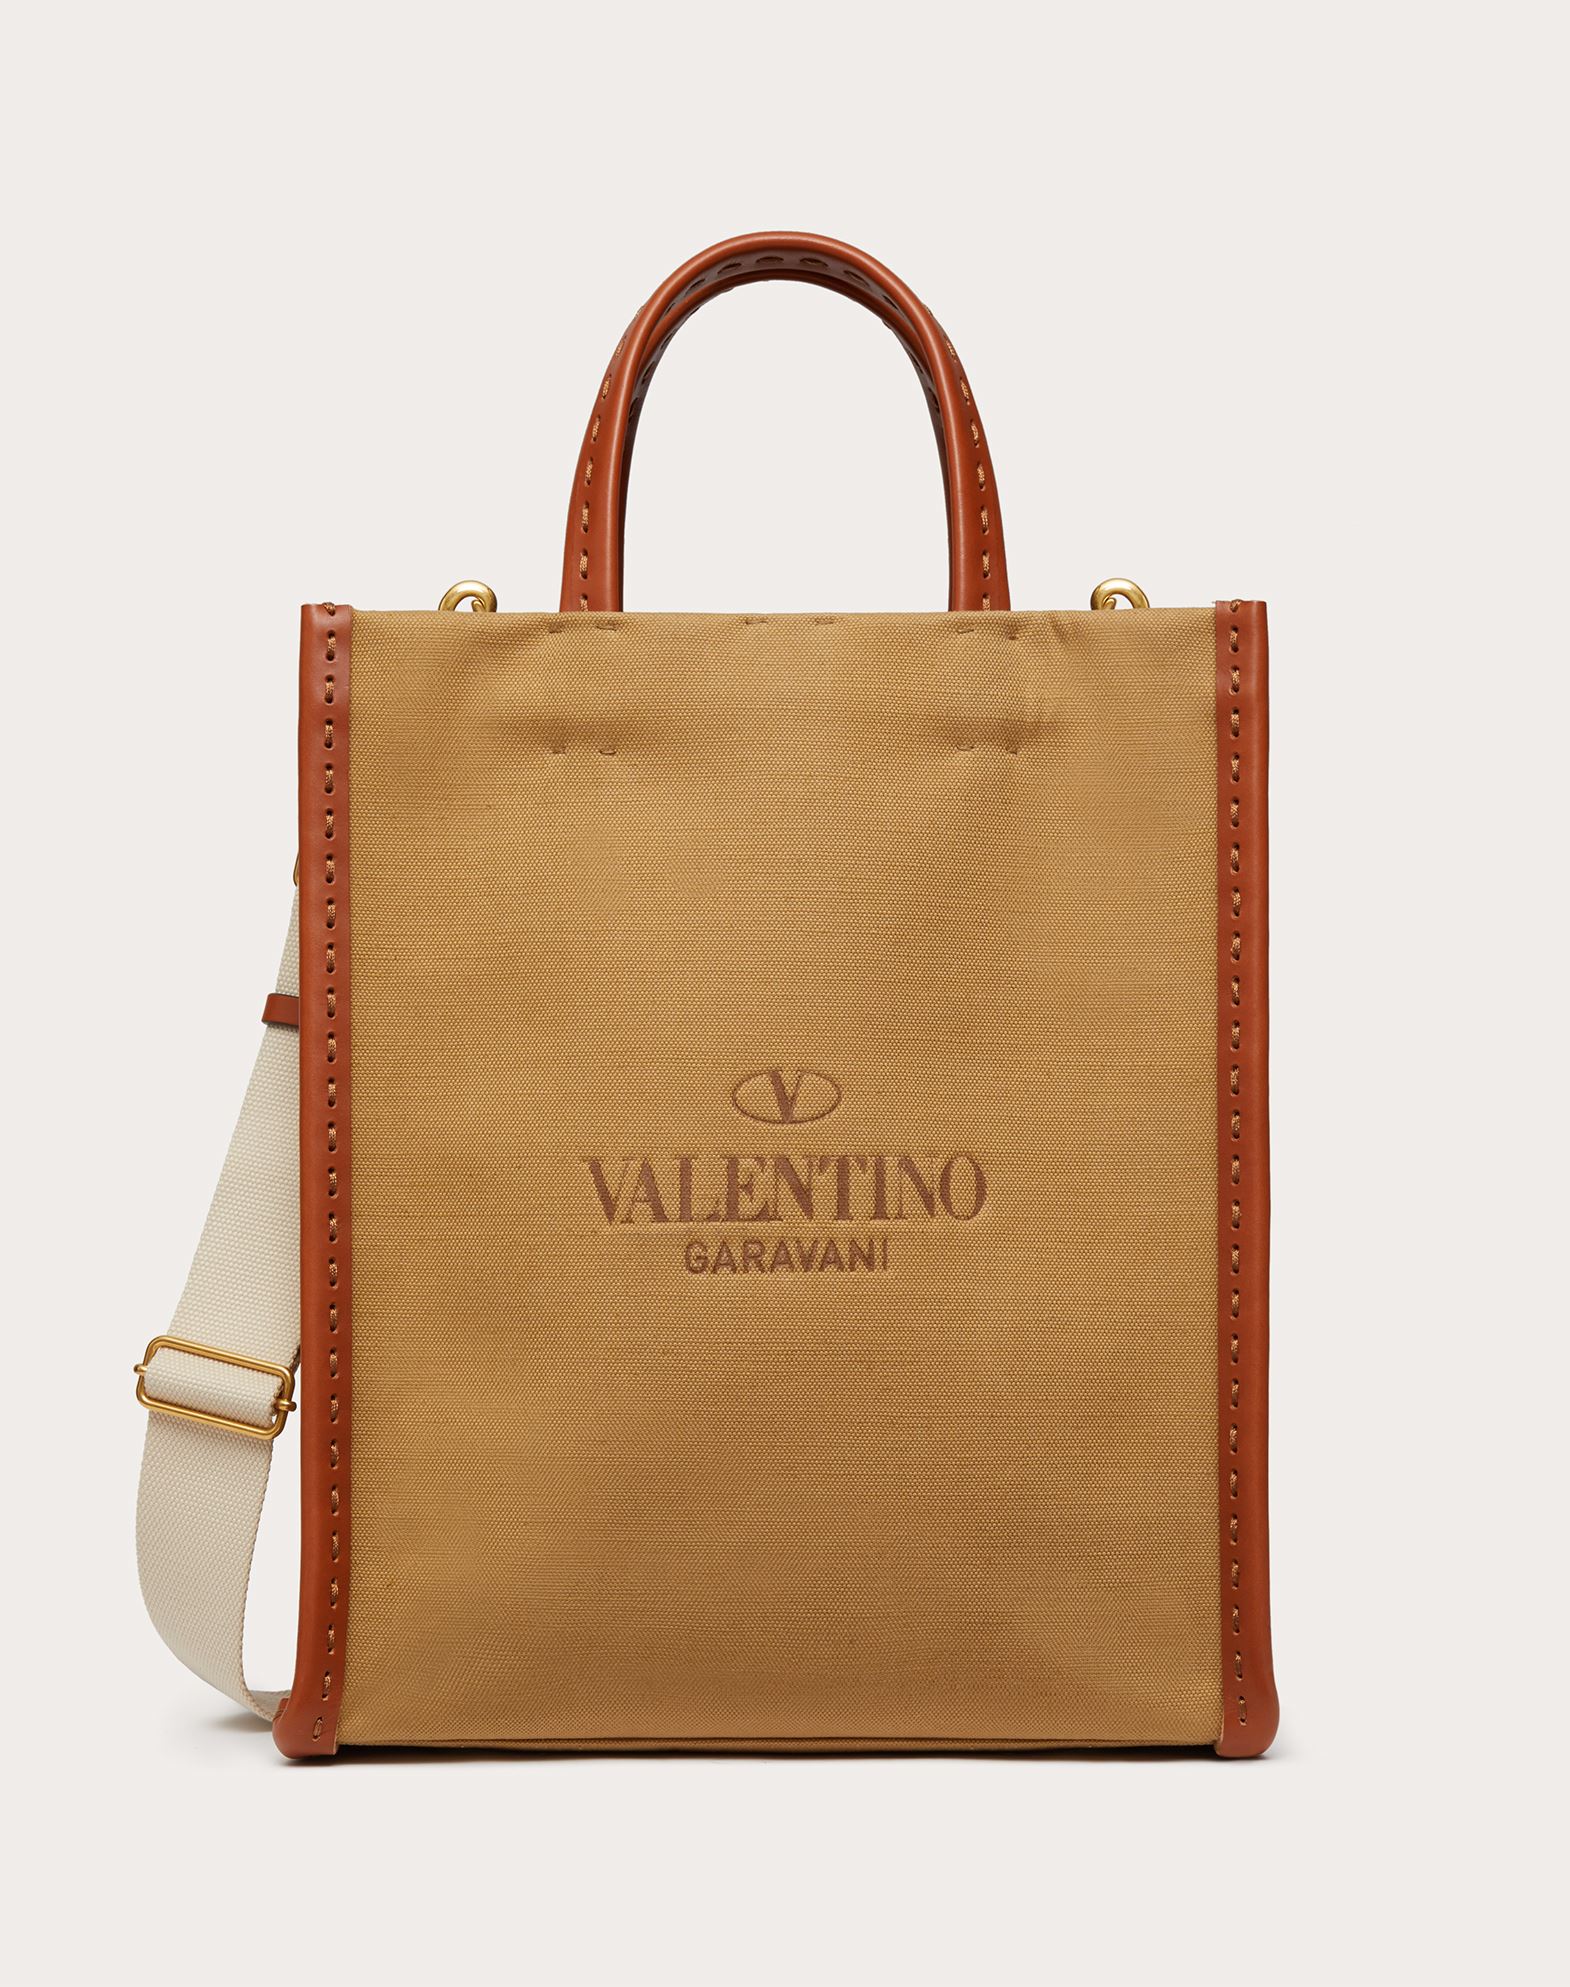 Valentino Garavani Identity Leather Shoulder Bag